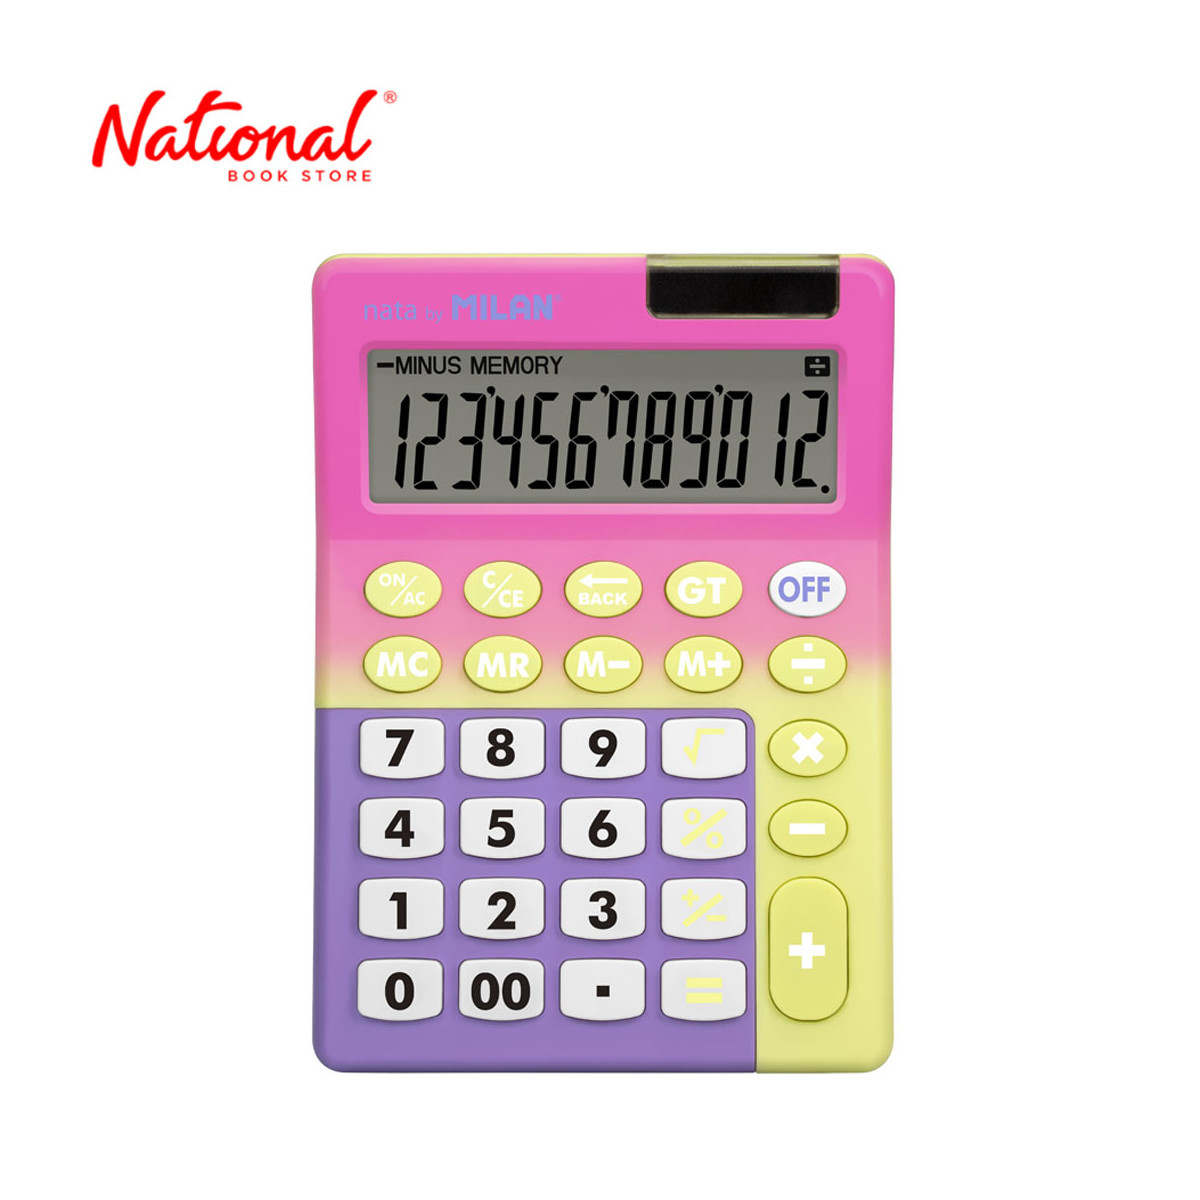 Milan Desktop Calculators 151812SNPR Sunset Pink 12 Digits - Office Equipment